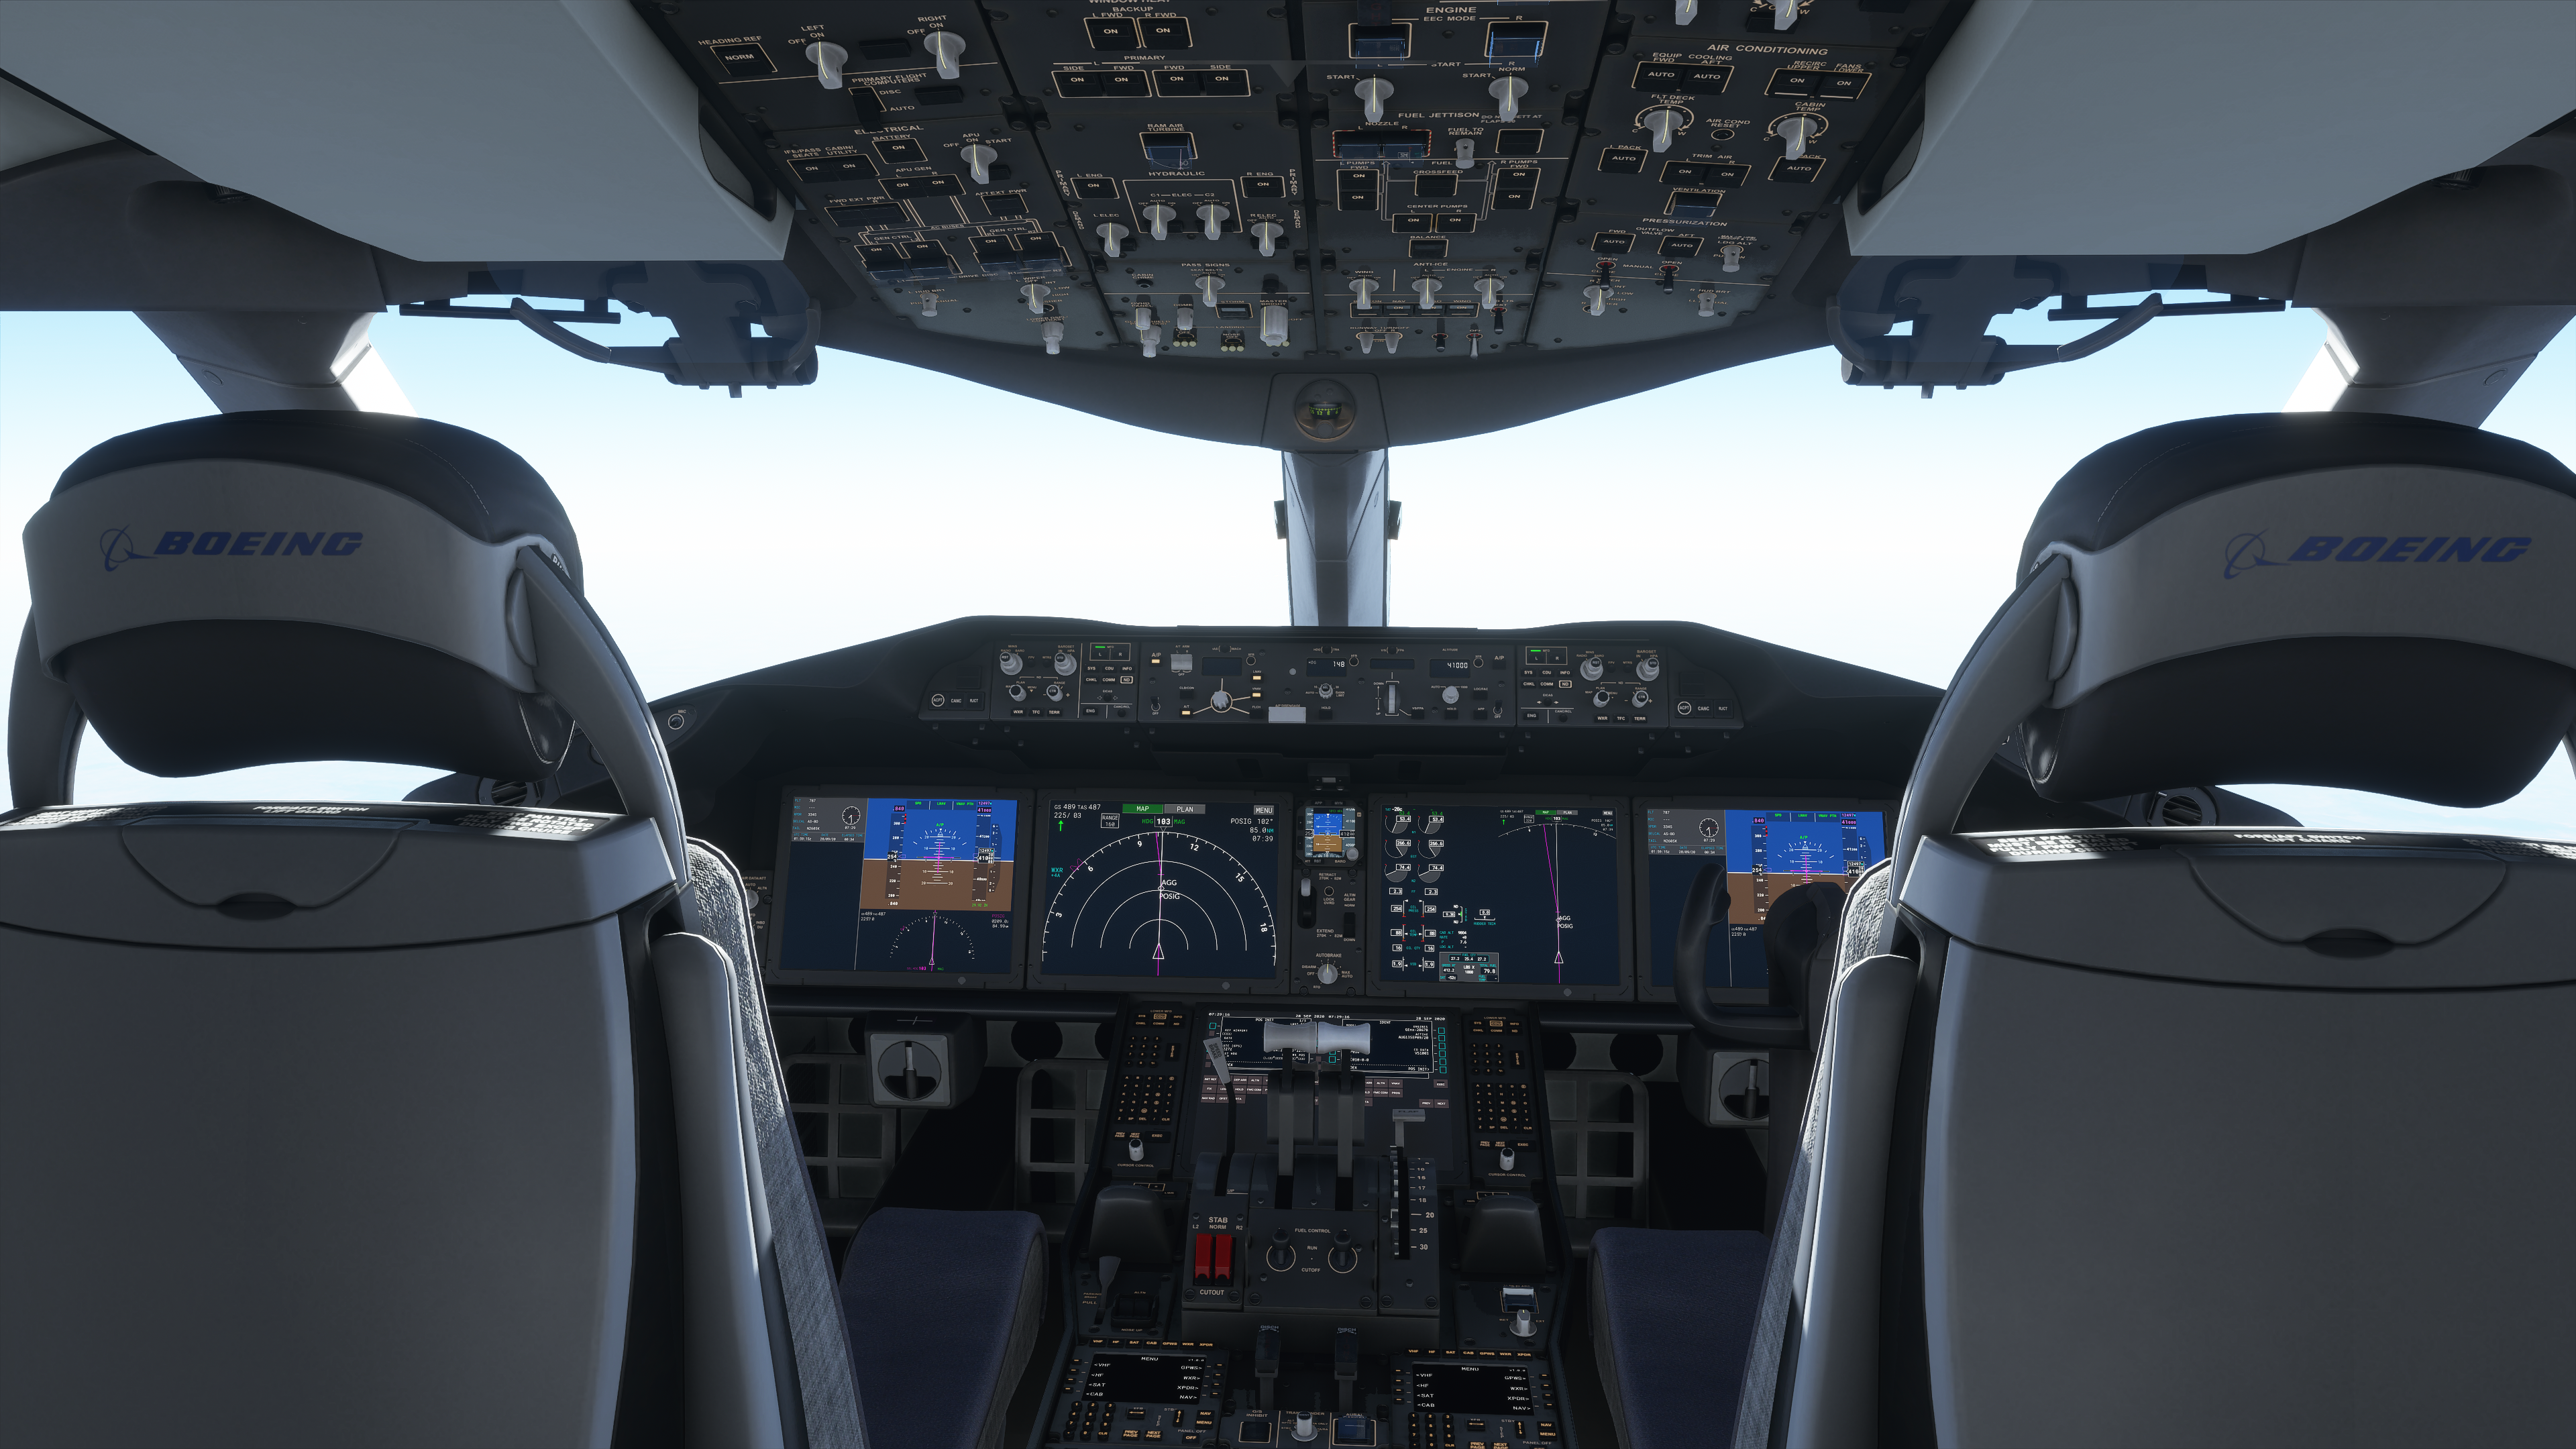 General 3840x2160 flight simulator Microsoft Flight Simulator Microsoft Flight Simulator 2020 Boeing 787 cockpit aircraft flying PC gaming screen shot passenger aircraft vehicle vehicle interiors